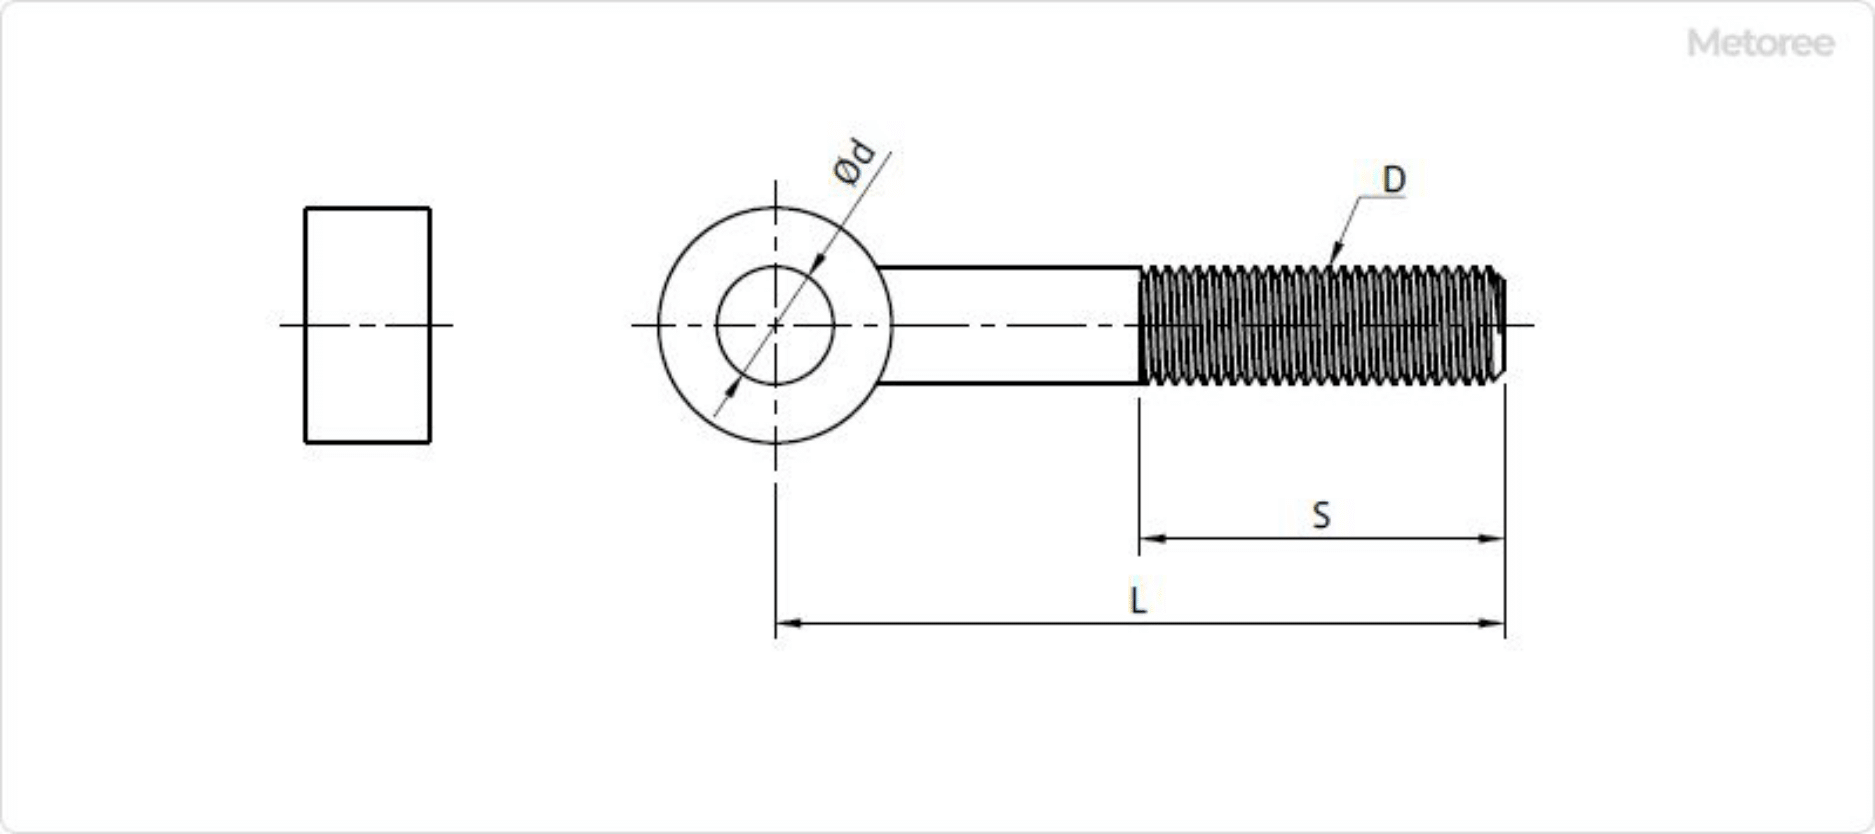 Figure 5. Dimensions of hinge bolt